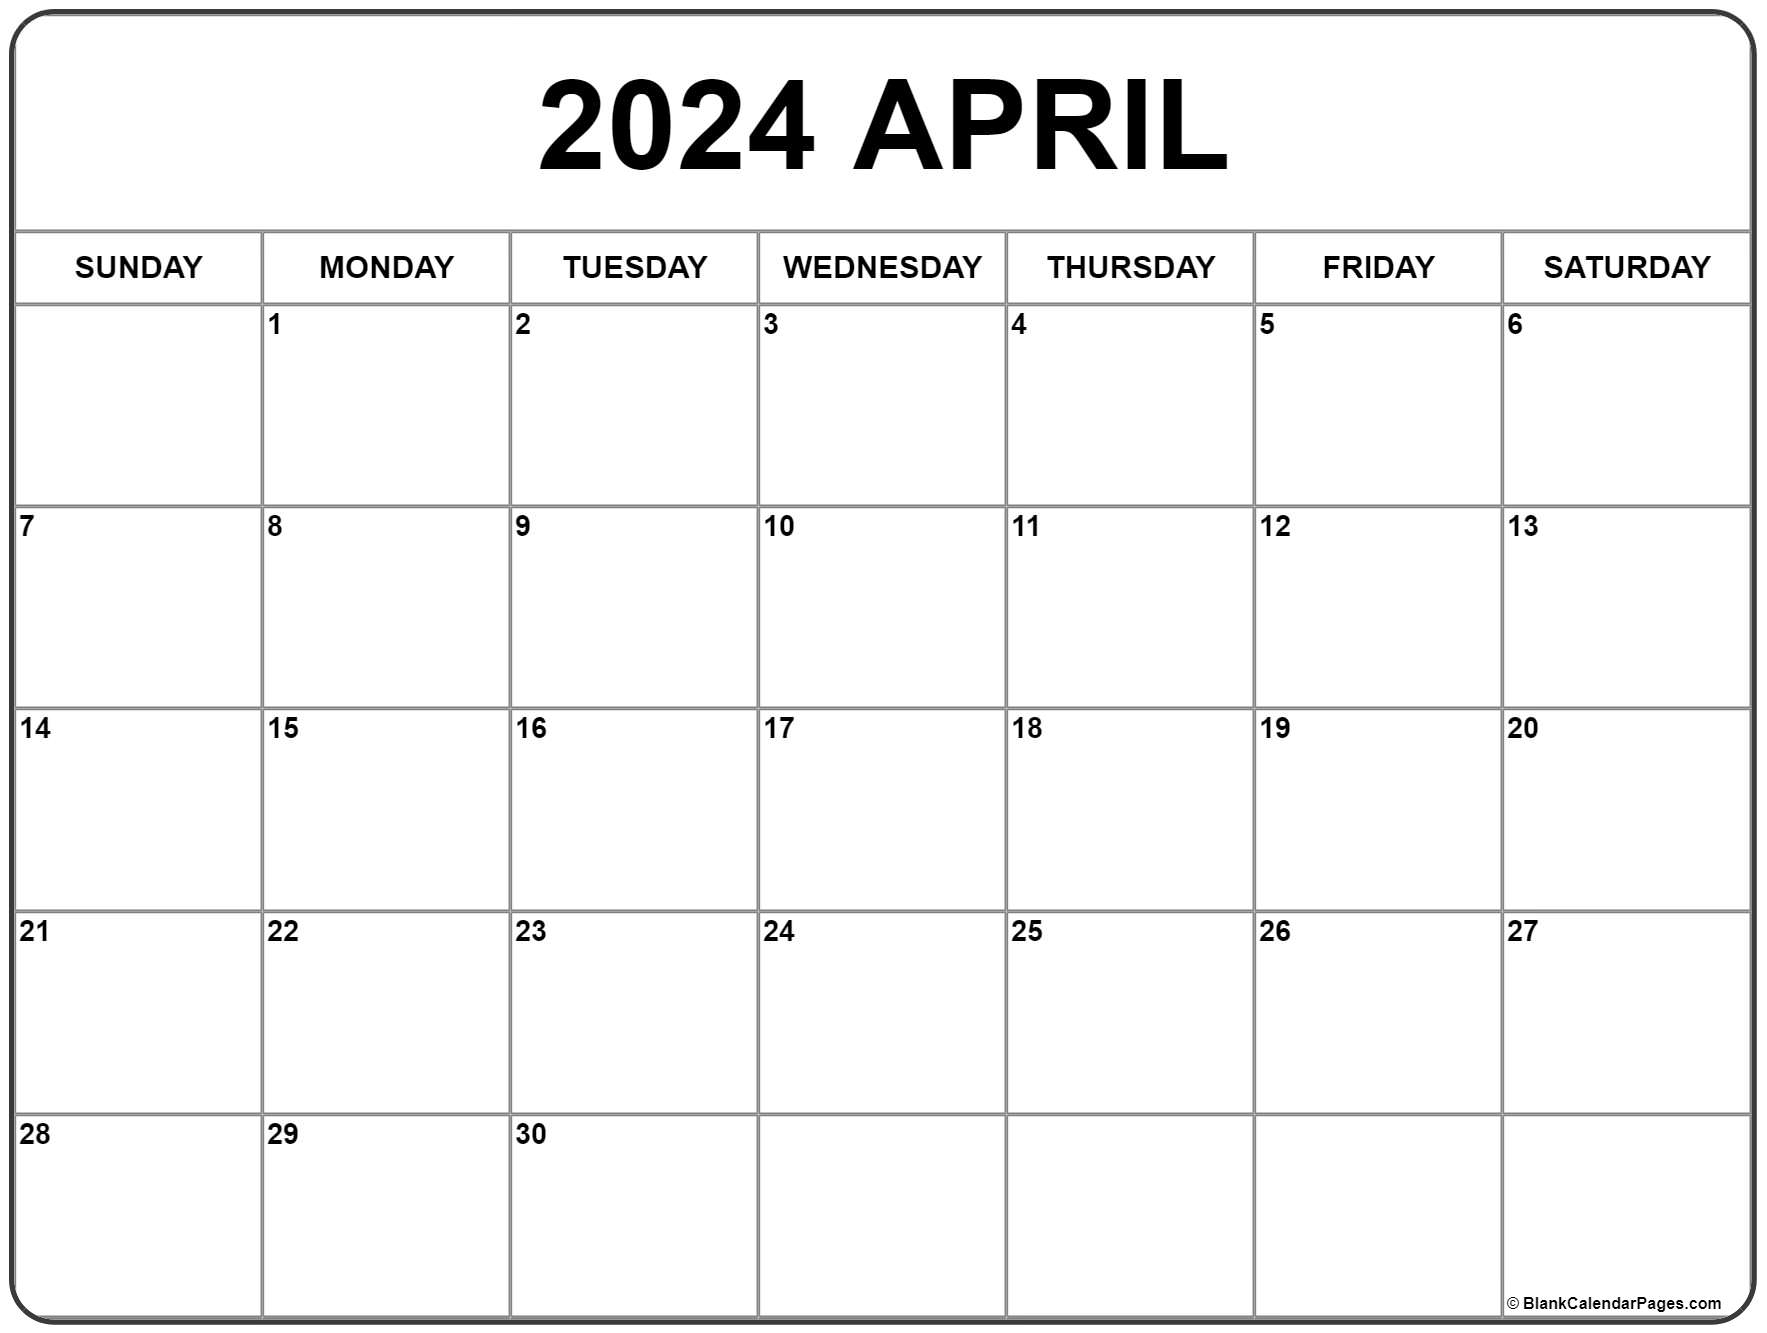 April 2024 Calendar | Free Printable Calendar inside Blank April 2024 Calendar